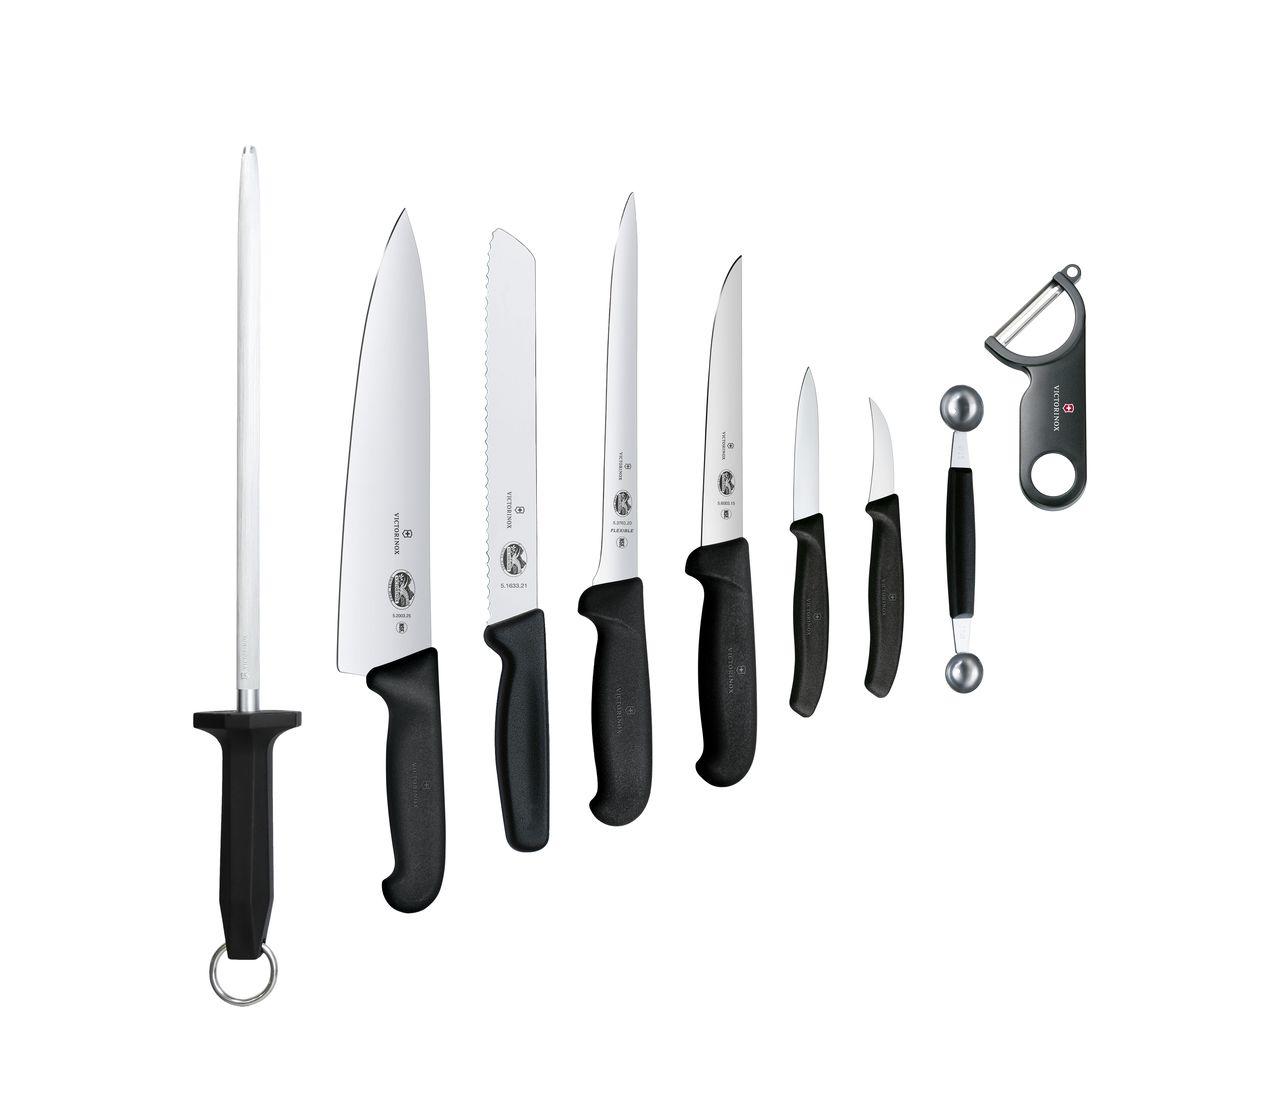 Set de 2 cuchillos Victorinox negro